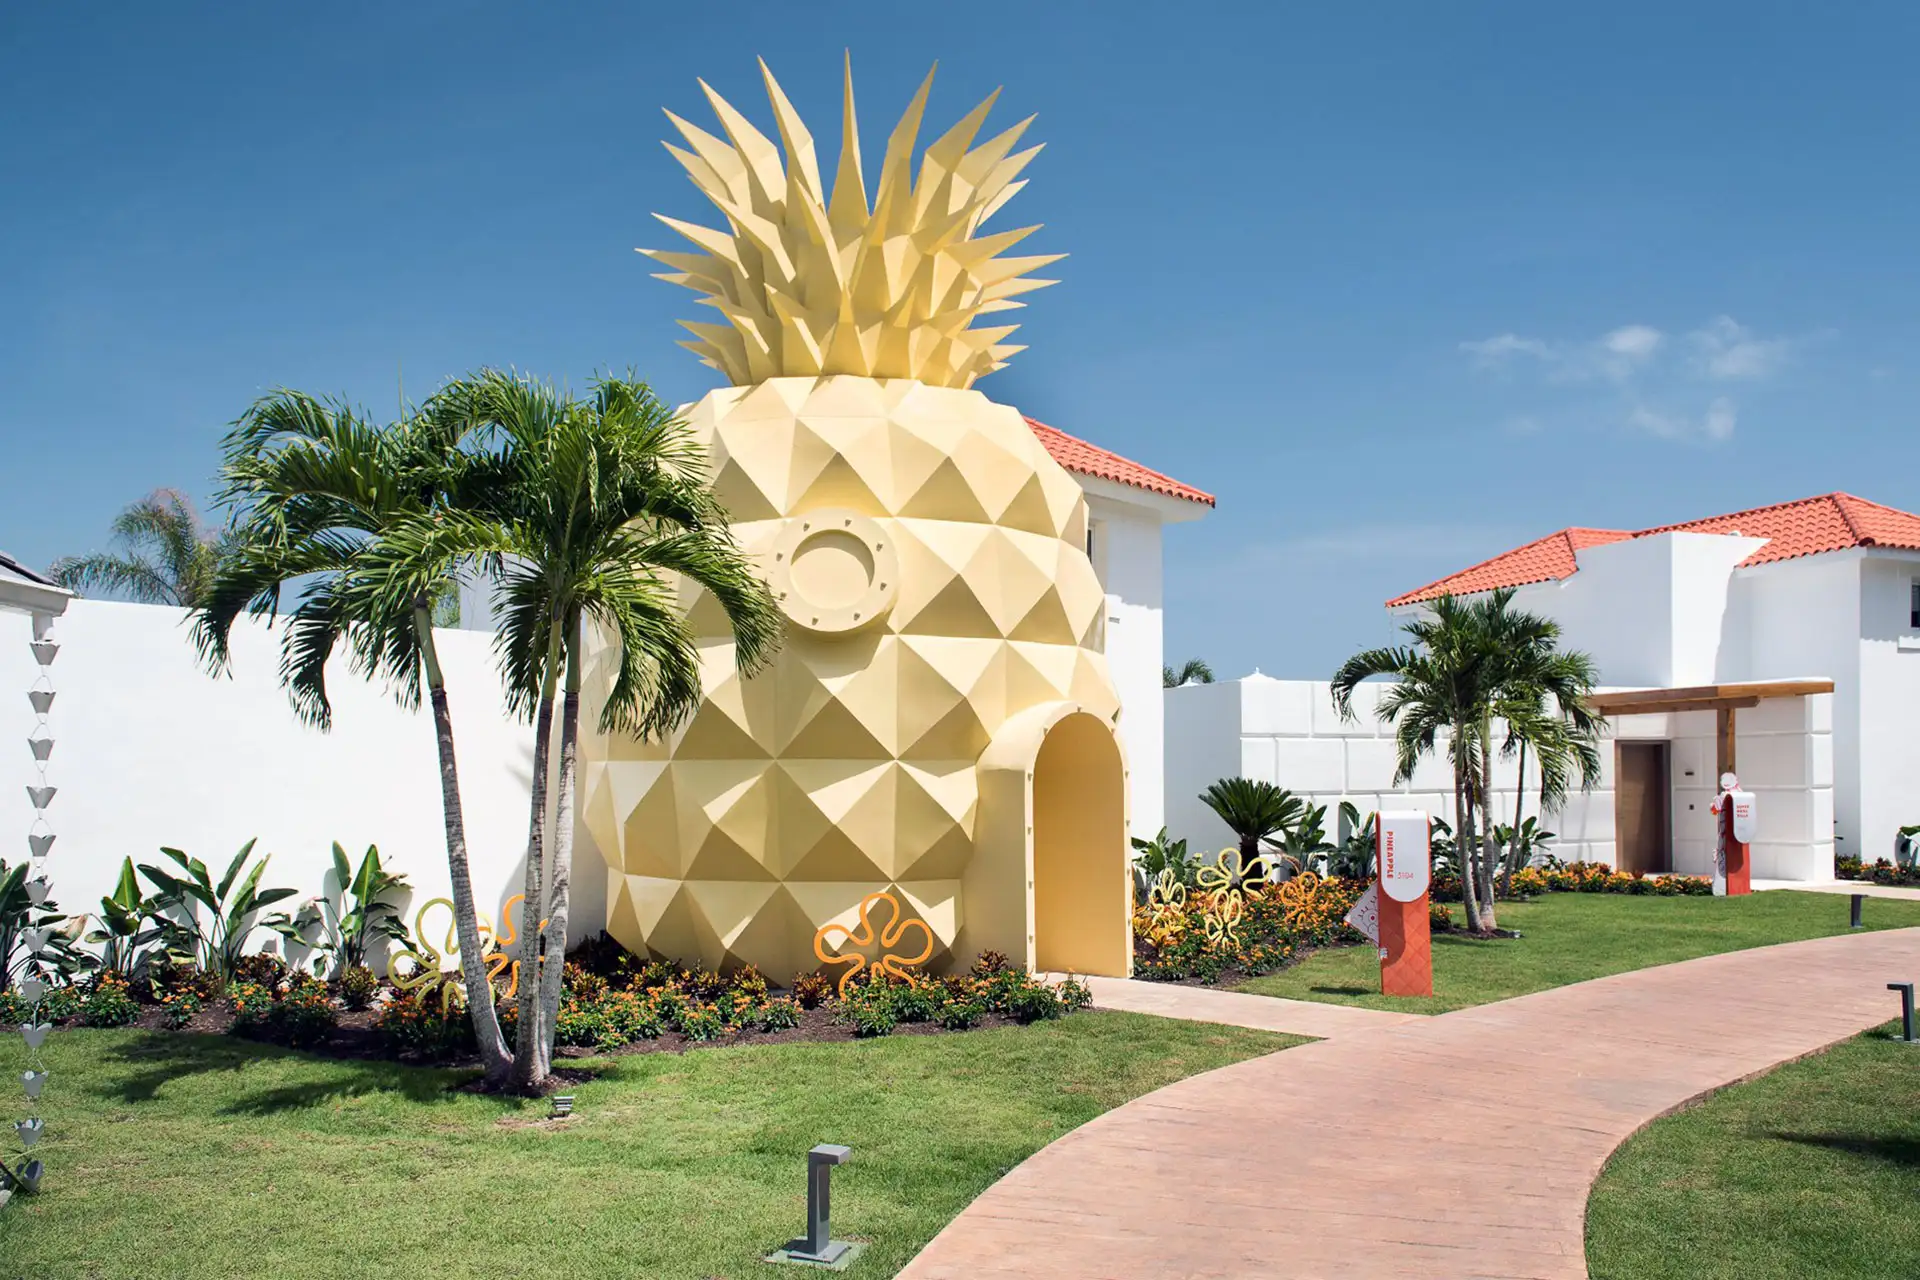 Spongebob Squarepants Suite at Nickelodeon Hotels and Resorts Punta Cana; Courtesy of Nickelodeon Hotels and Resorts Punta Cana